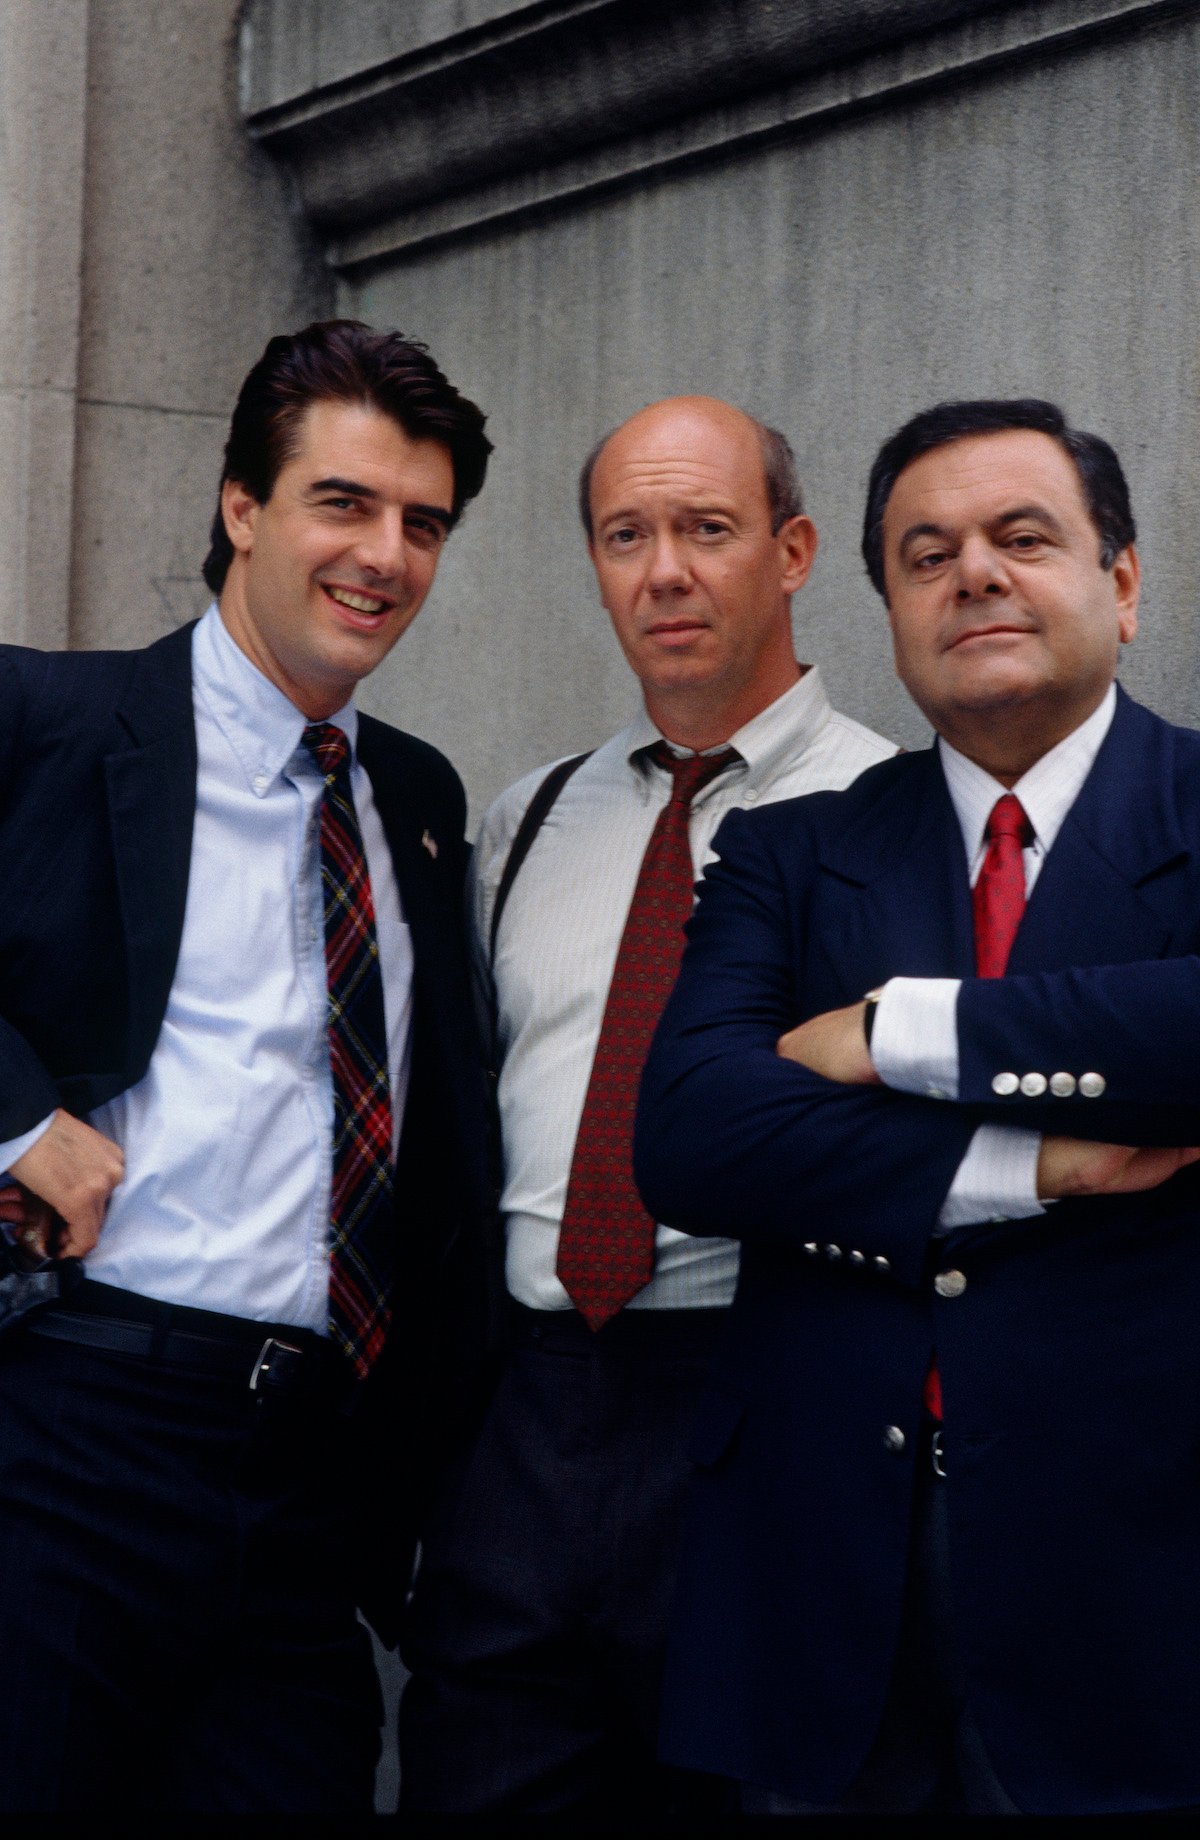 Chris Noth, Dann Florek, and Paul Sorvino in 'Law & Order' 